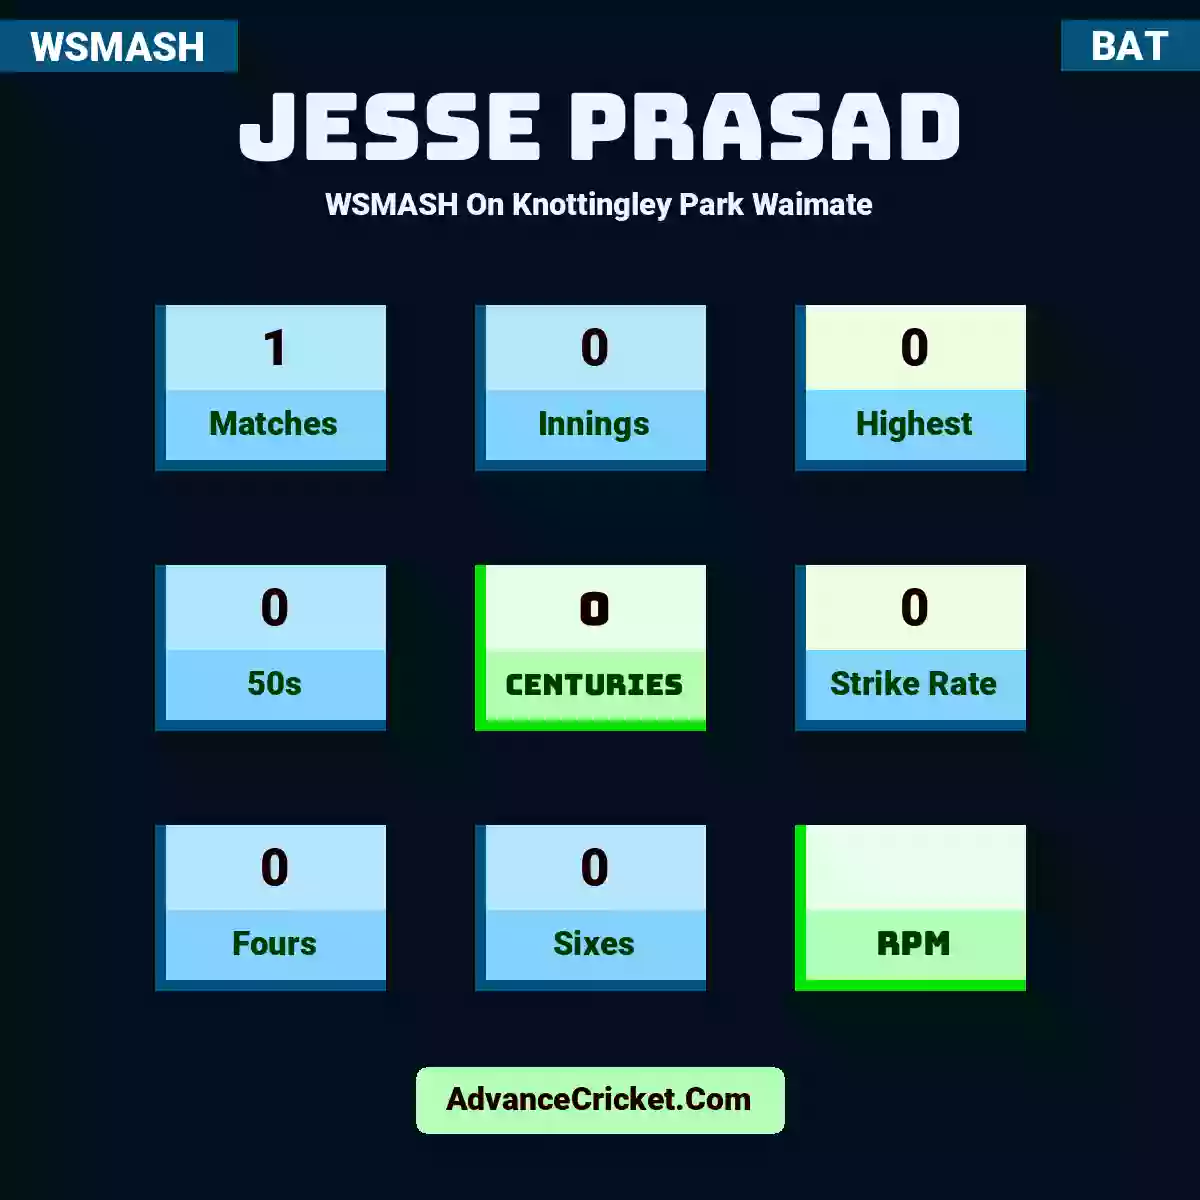 Jesse Prasad WSMASH  On Knottingley Park Waimate, Jesse Prasad played 1 matches, scored 0 runs as highest, 0 half-centuries, and 0 centuries, with a strike rate of 0. J.Prasad hit 0 fours and 0 sixes.